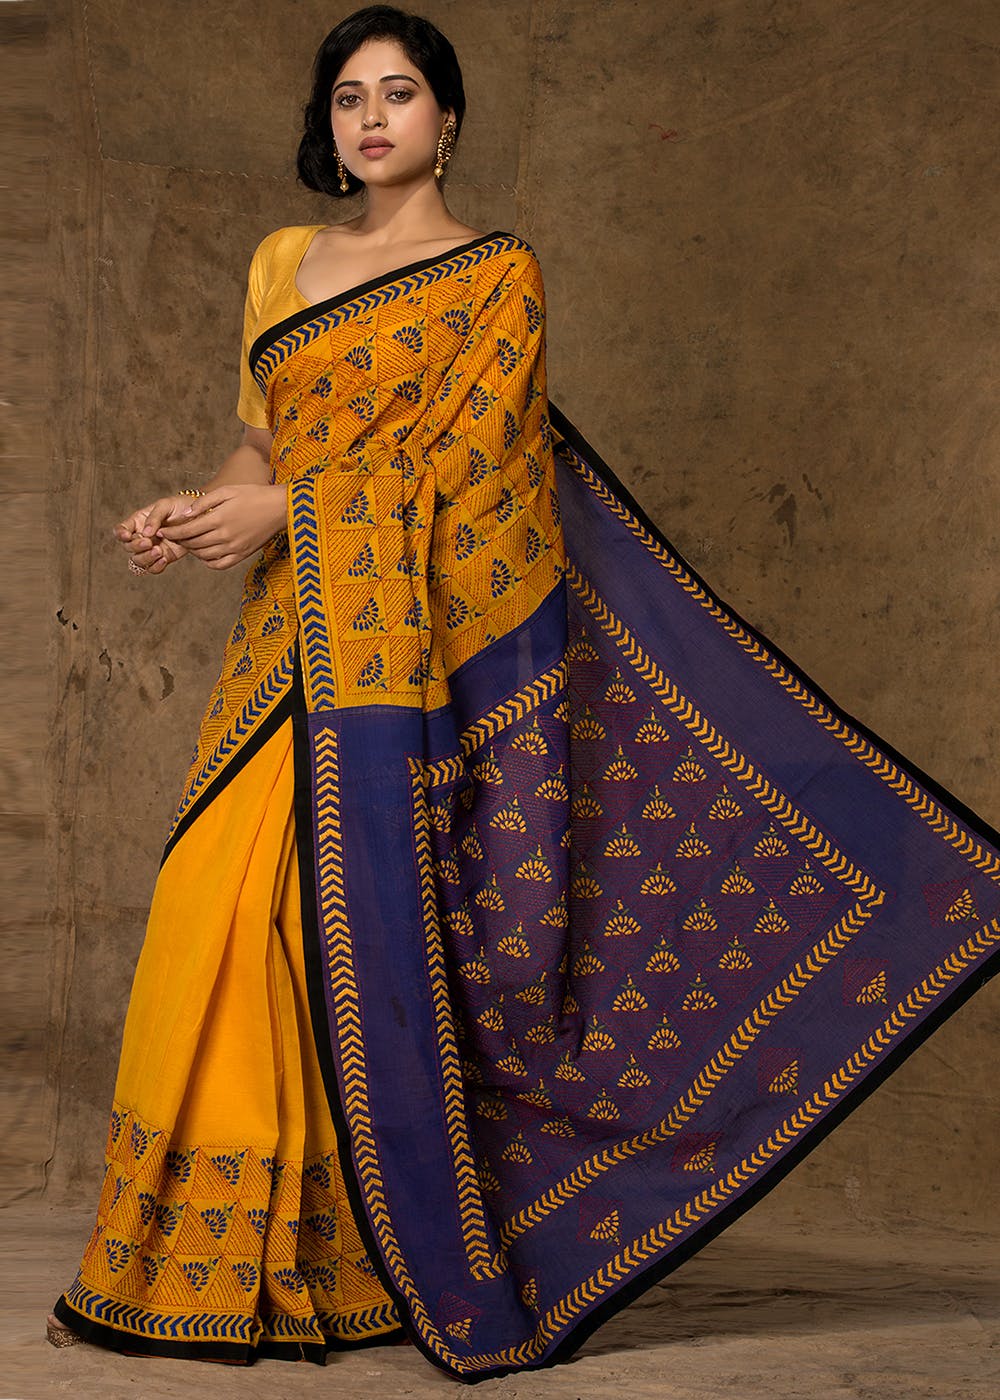 Get Amber Yellow Kantha Embroidered Bangladeshi Cotton Saree at ₹ 5385 |  LBB Shop